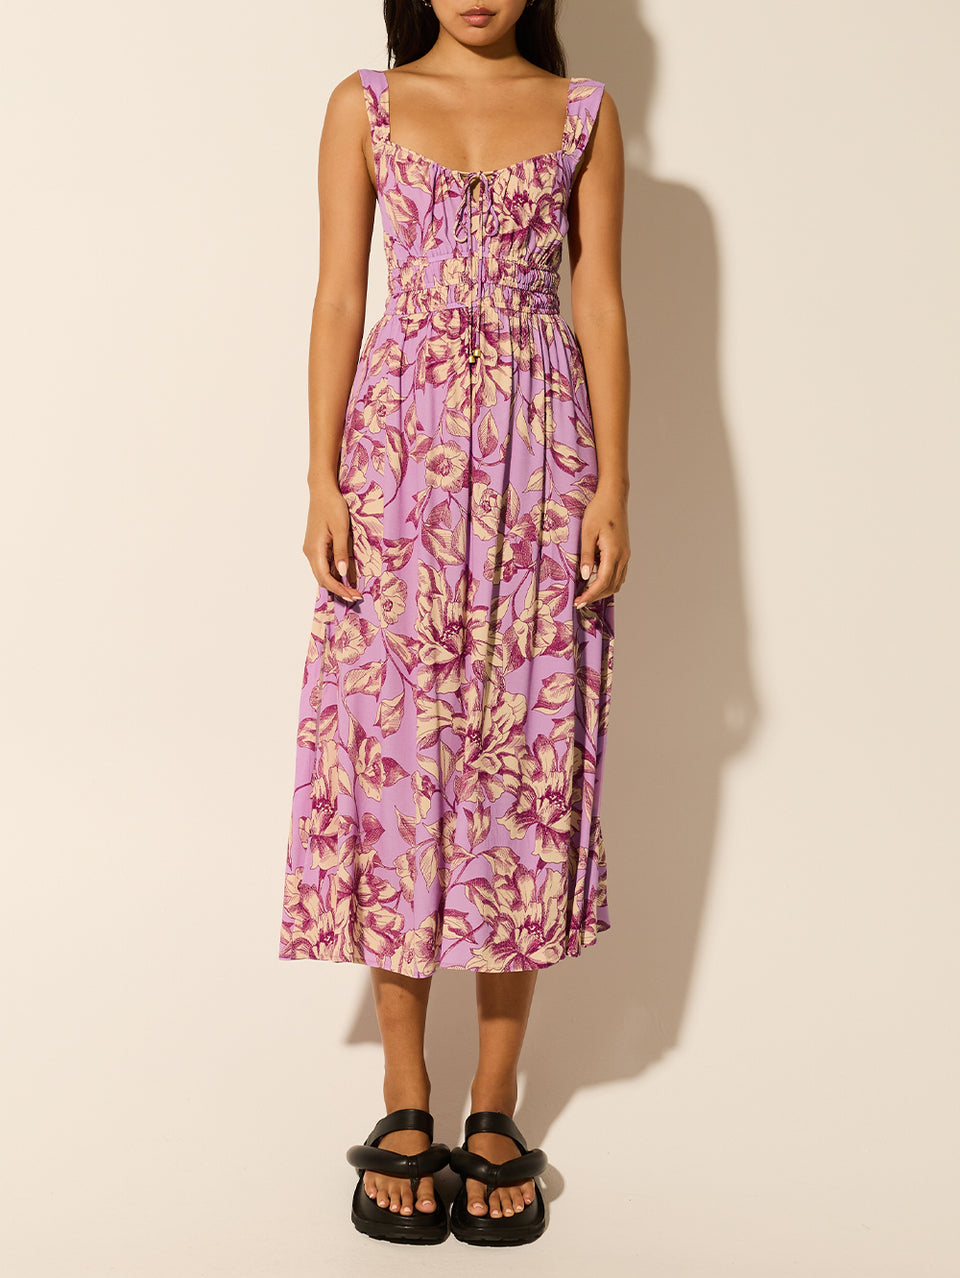 Reyna Strappy Midi Dress KIVARI | Model wears purple floral strappy midi dress